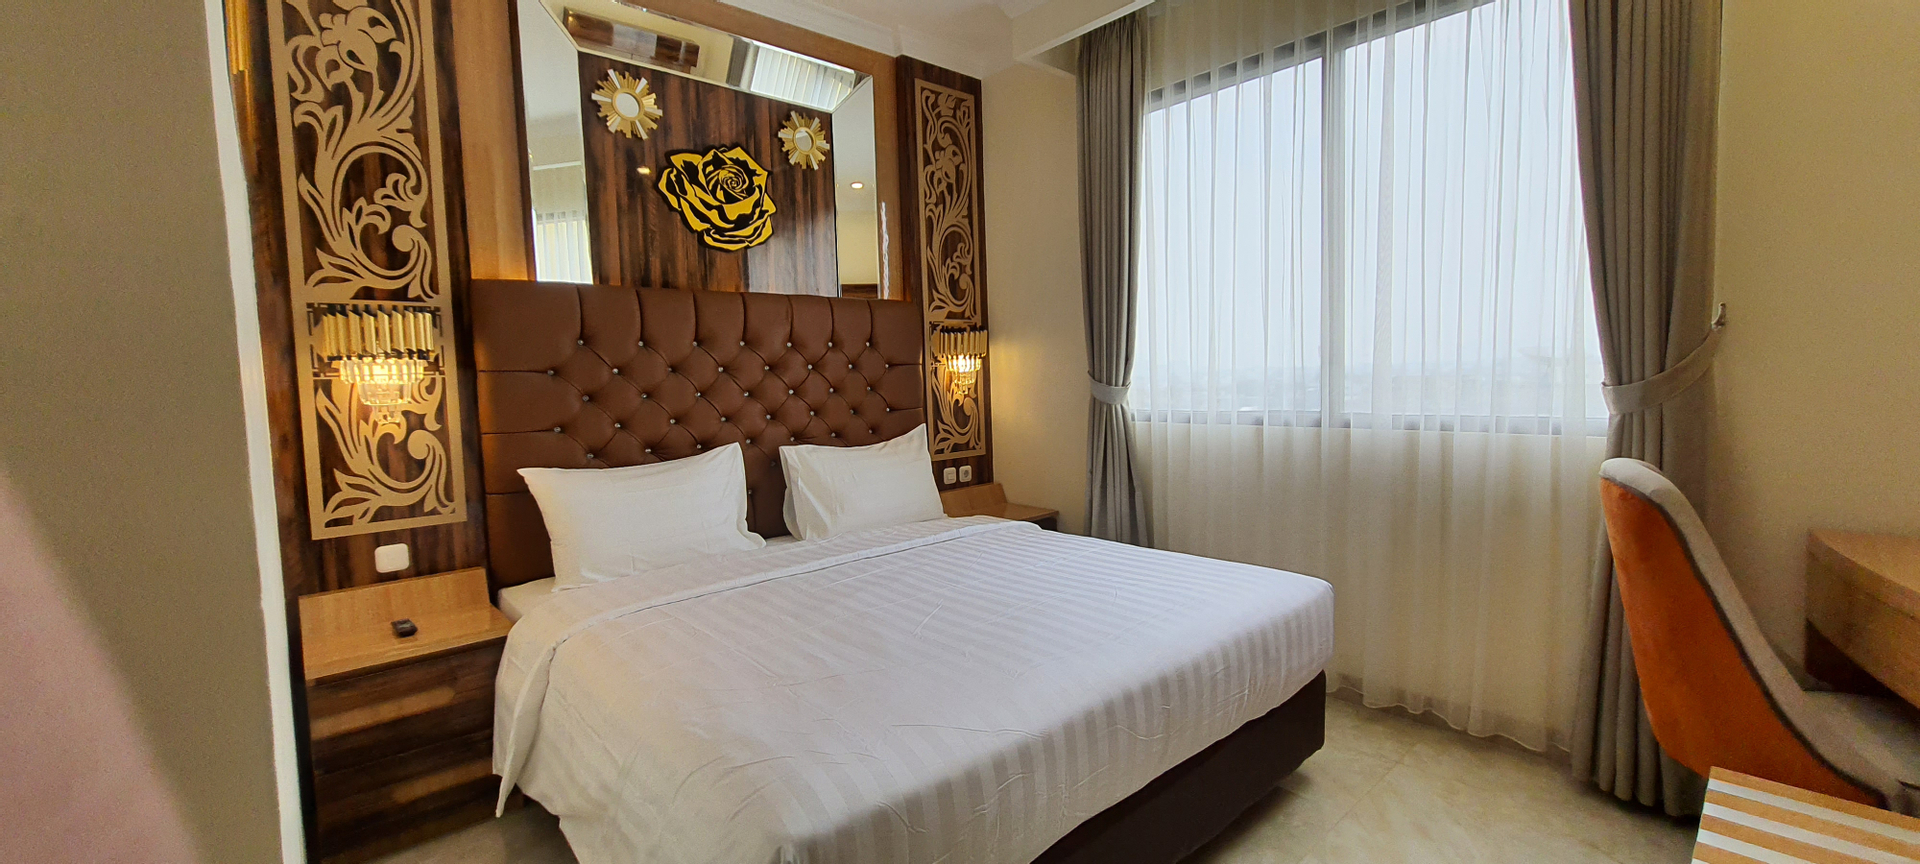 Bedroom 3, HOTEL DAILY INN BANDUNG, Bandung